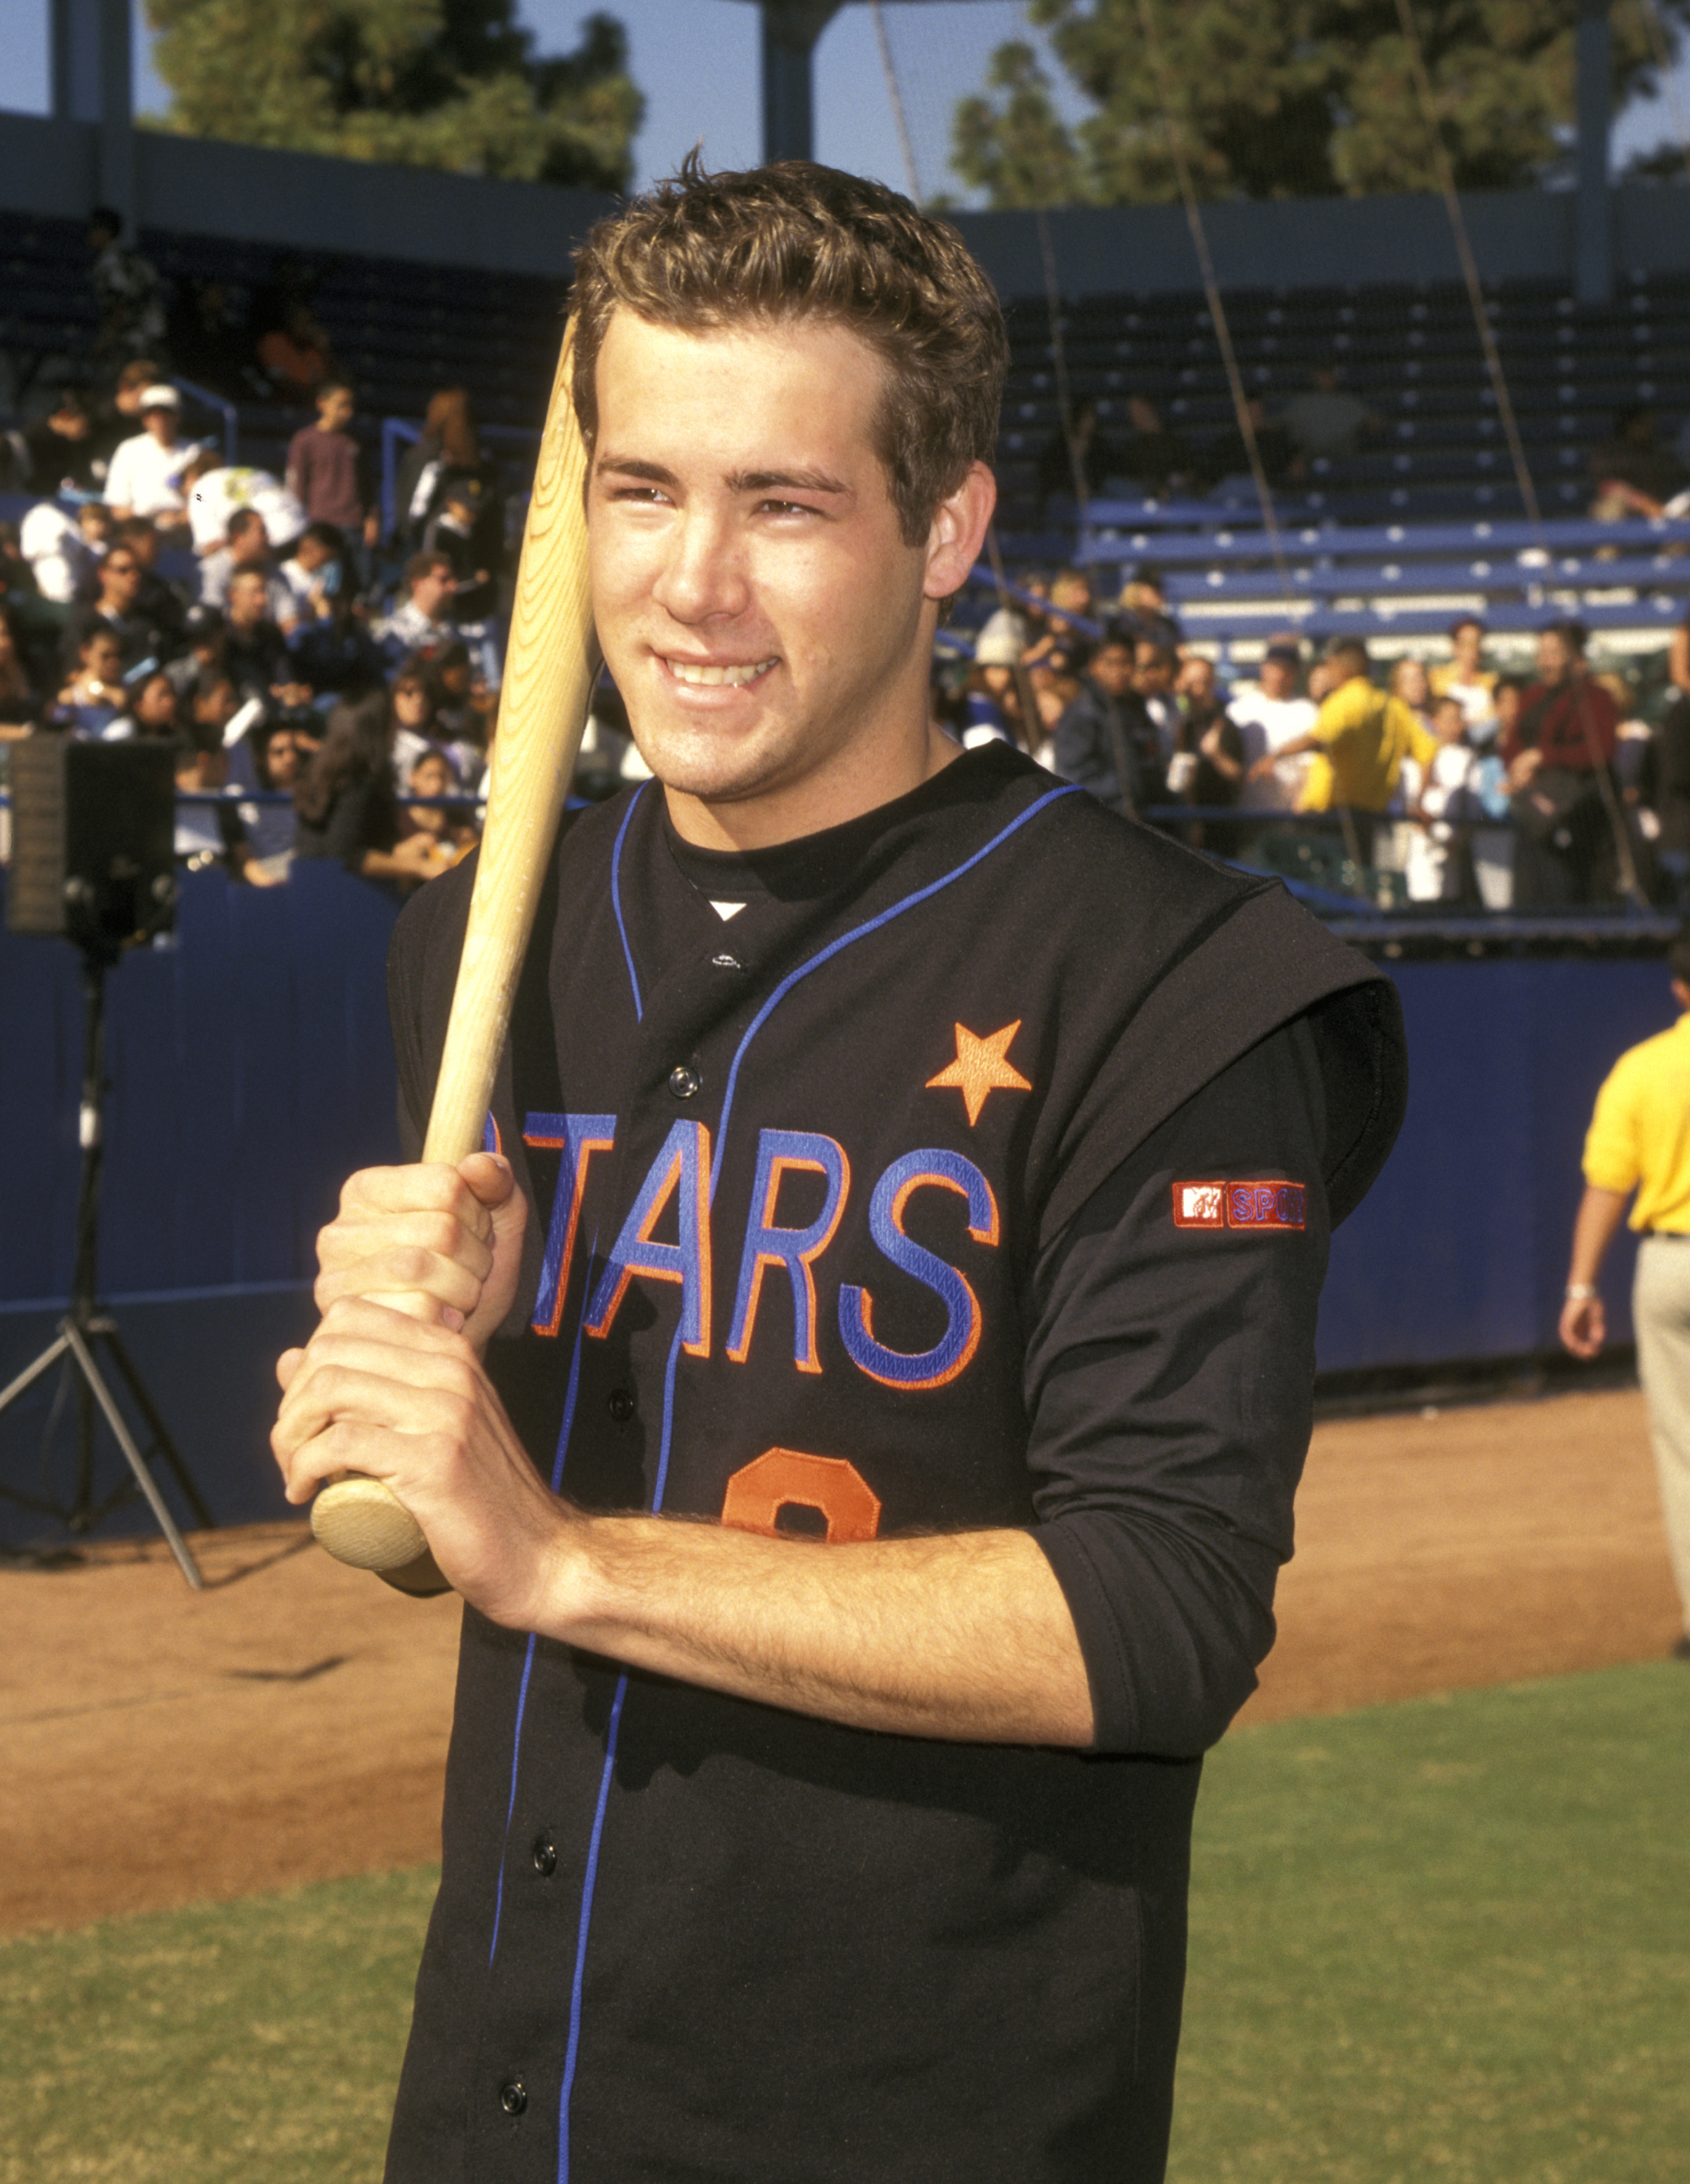 Ryan Reynolds at a baseball stadium during MTV"s "Rock N' Jock Baseball" in Long Branch, California on January 23, 1999 | Source: Getty Images